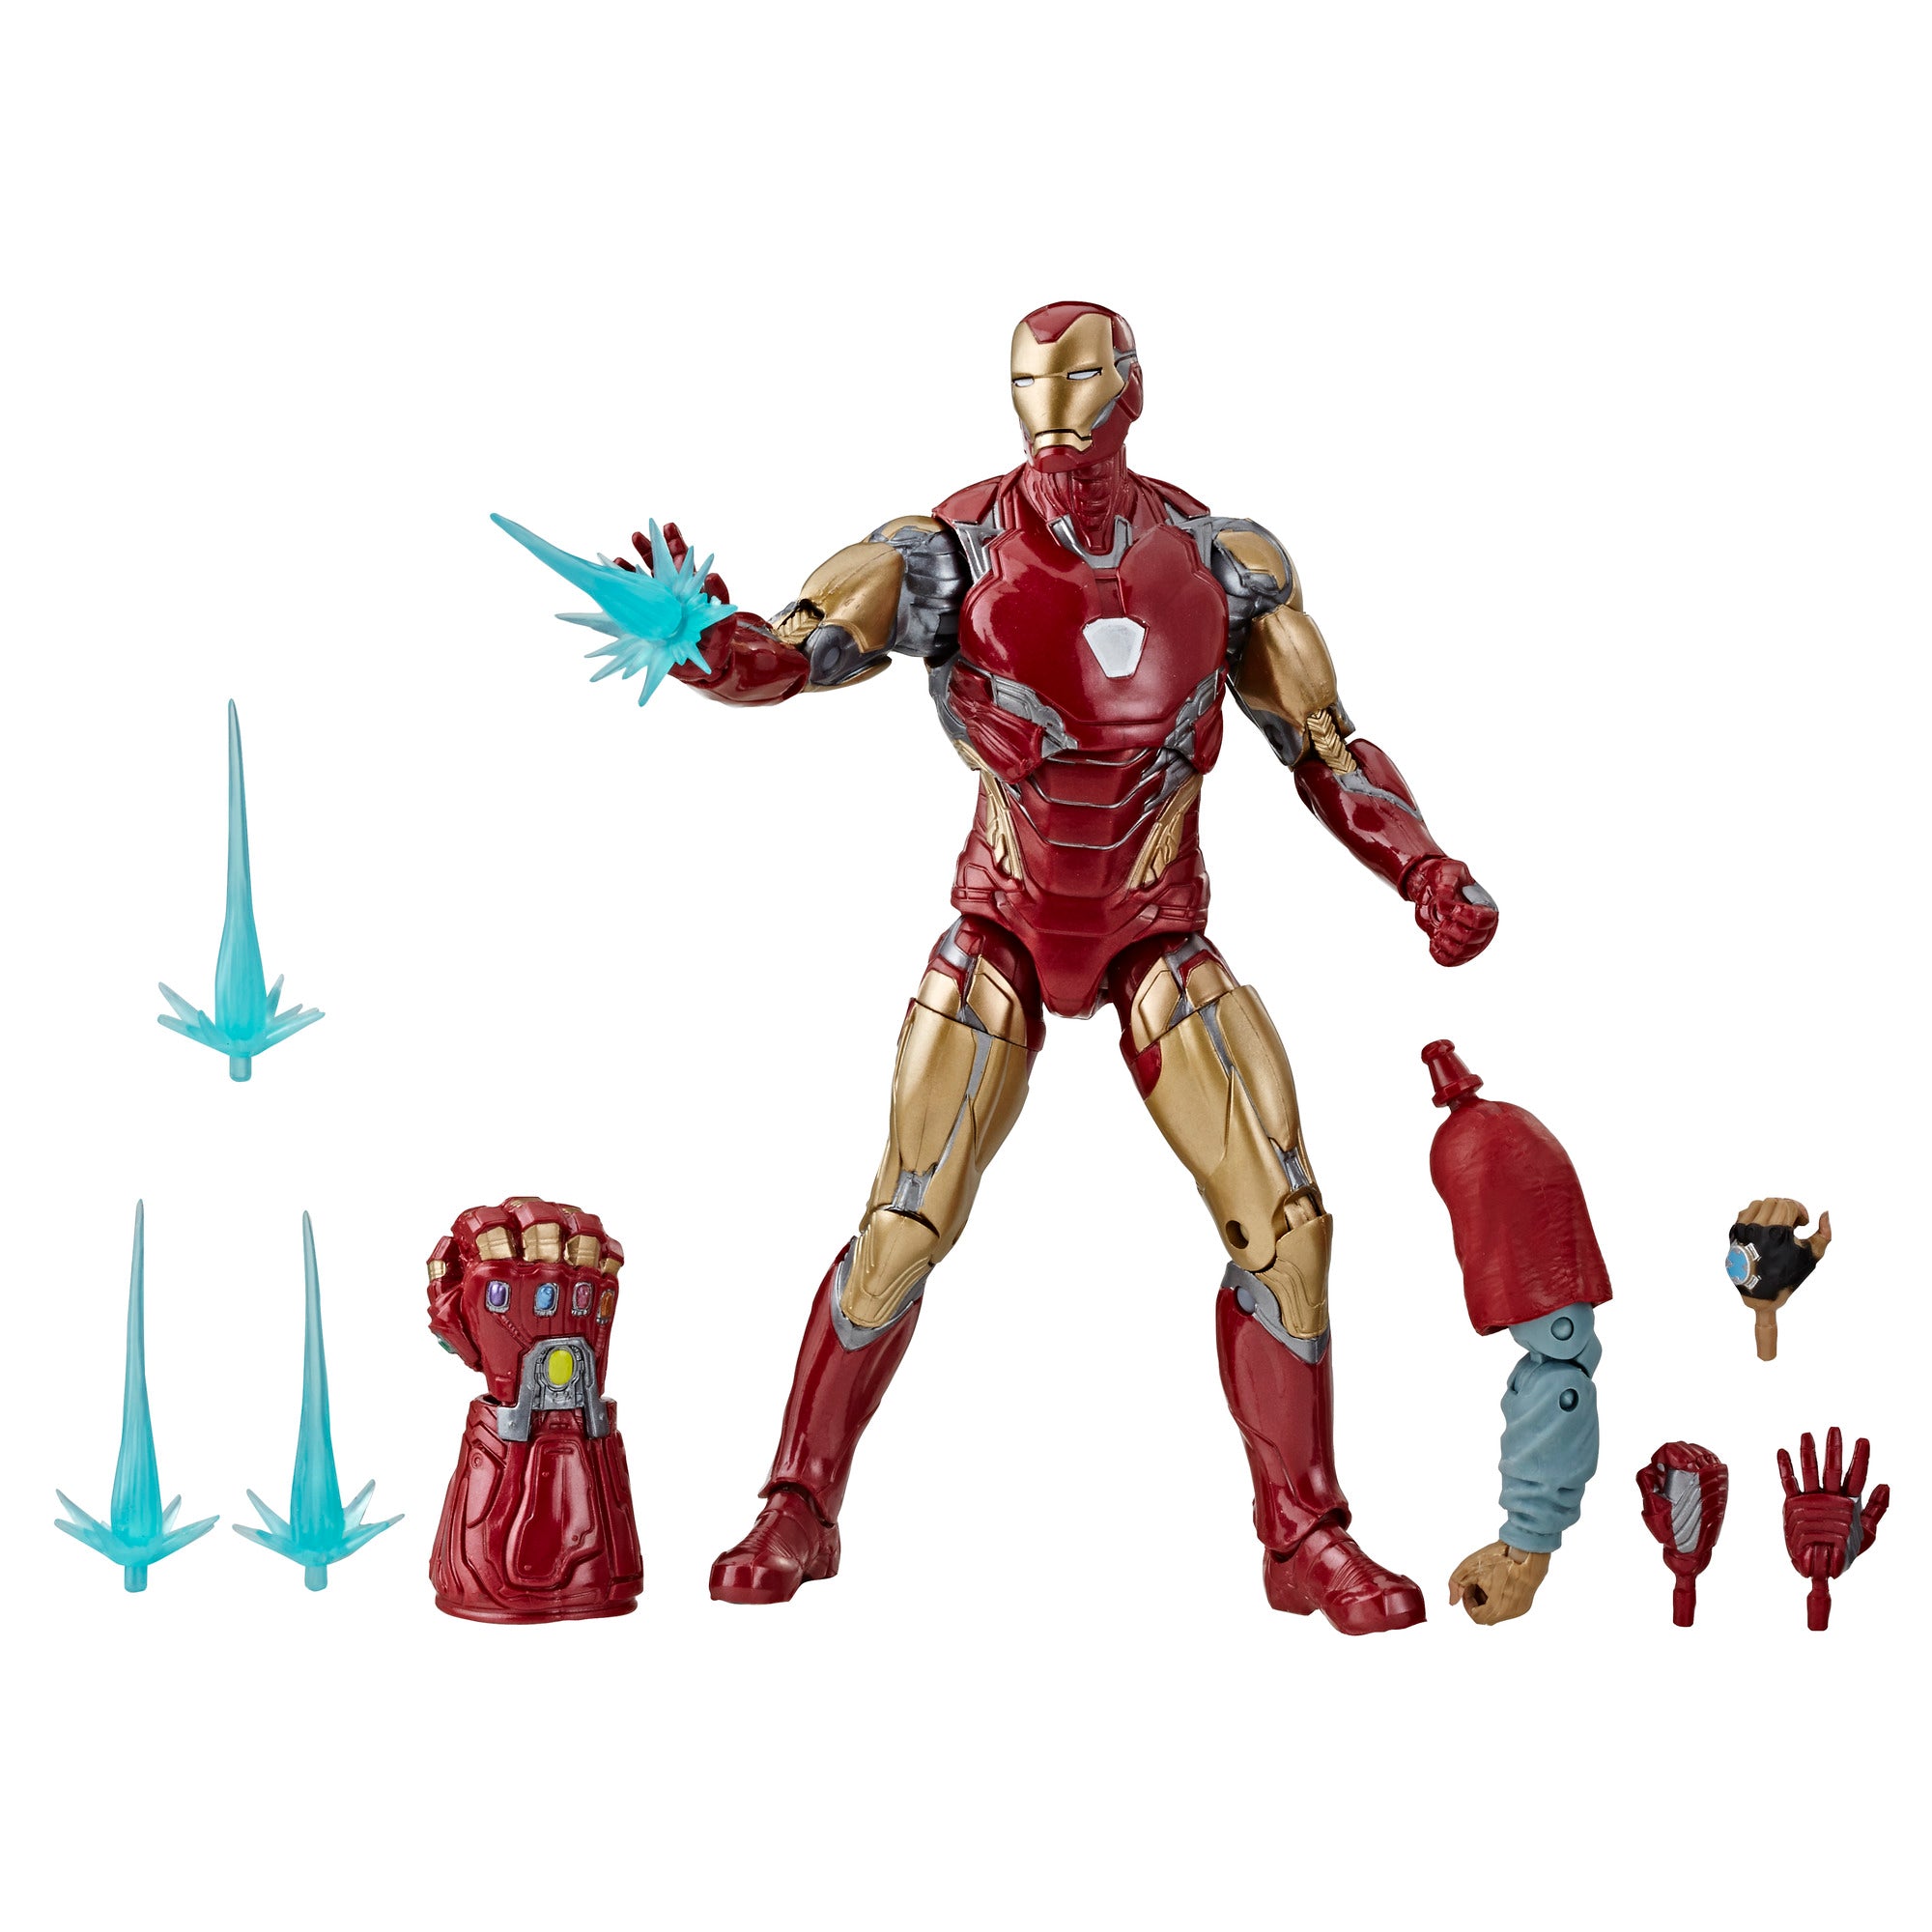 Marvel Legends Series Avengers: Endgame Iron Man Mark LXXXV Figure